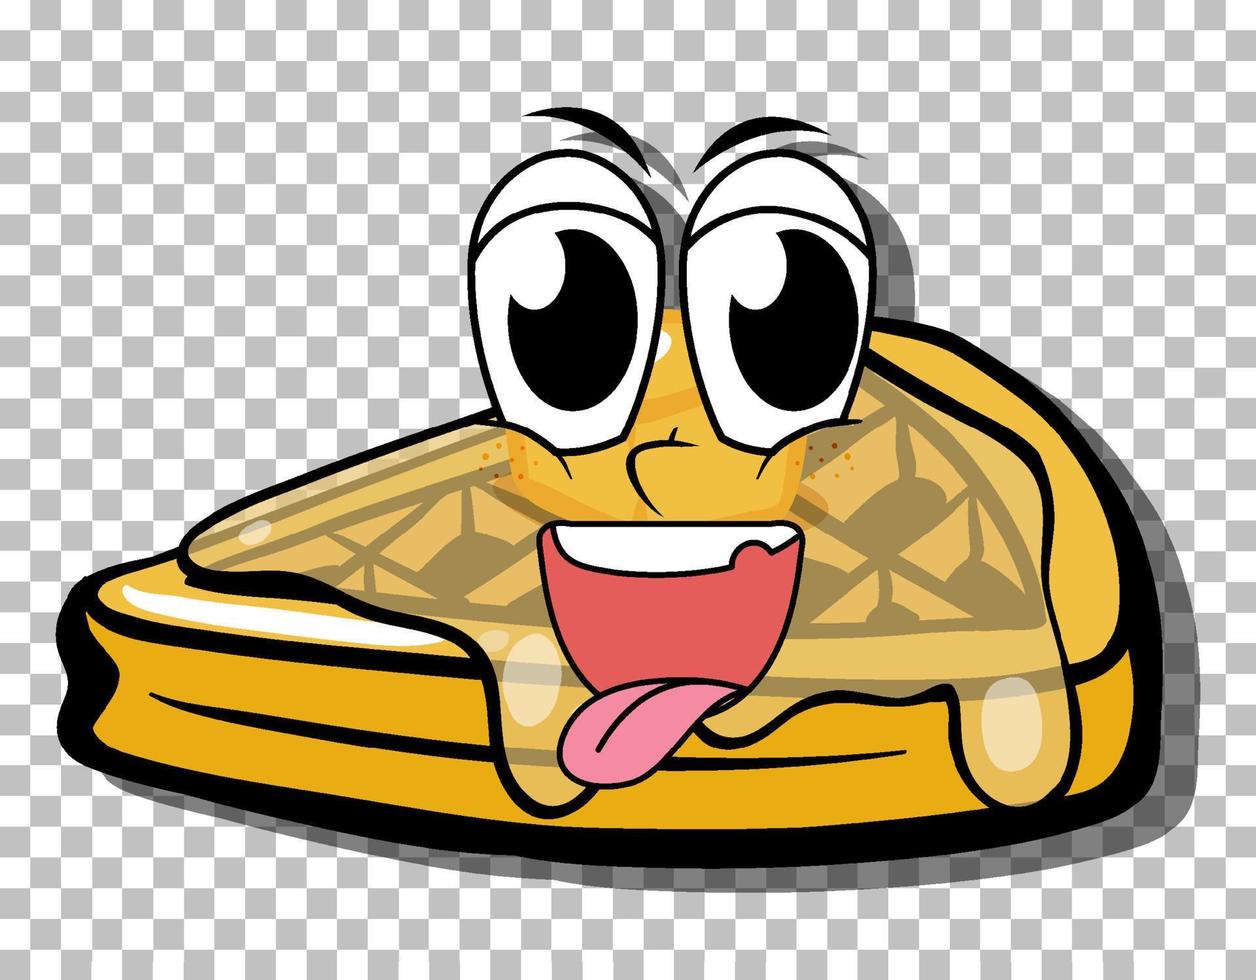 Waffle cartoon character isolated vector